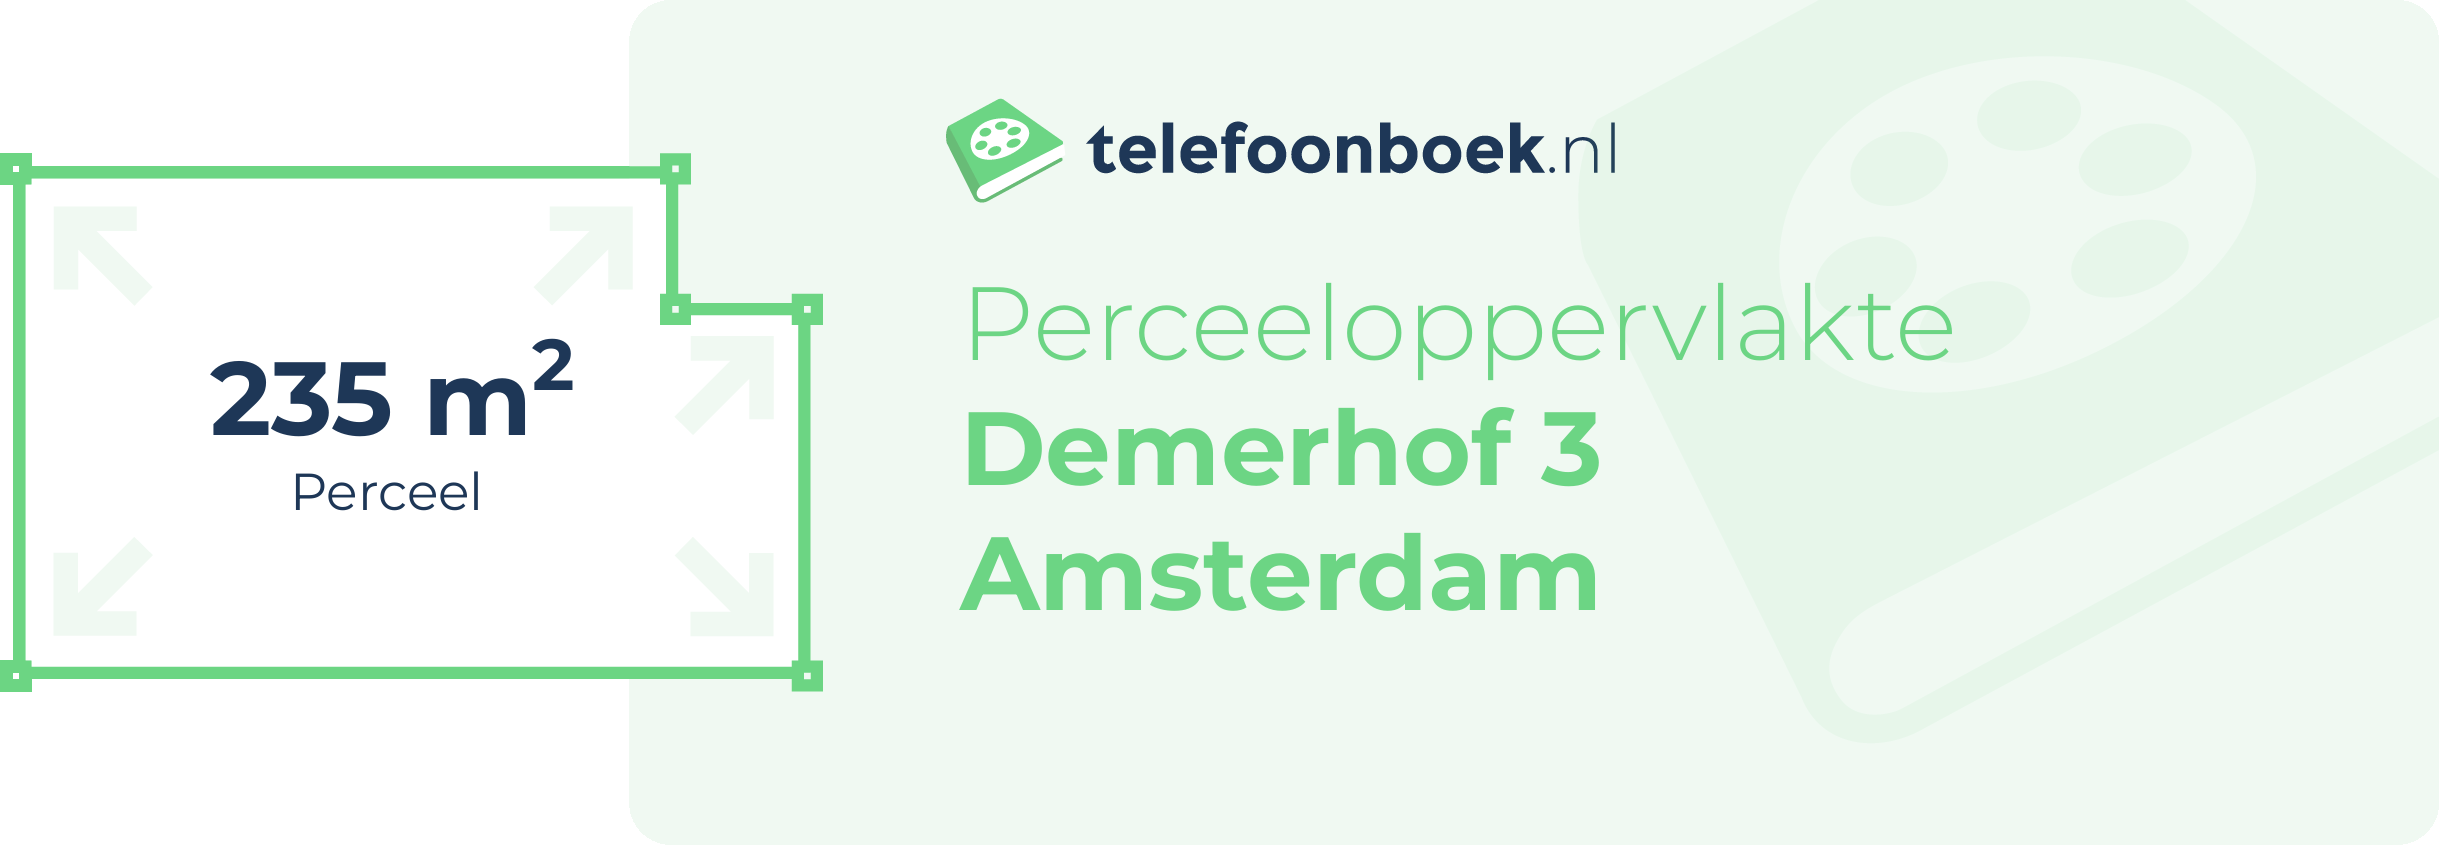 Perceeloppervlakte Demerhof 3 Amsterdam